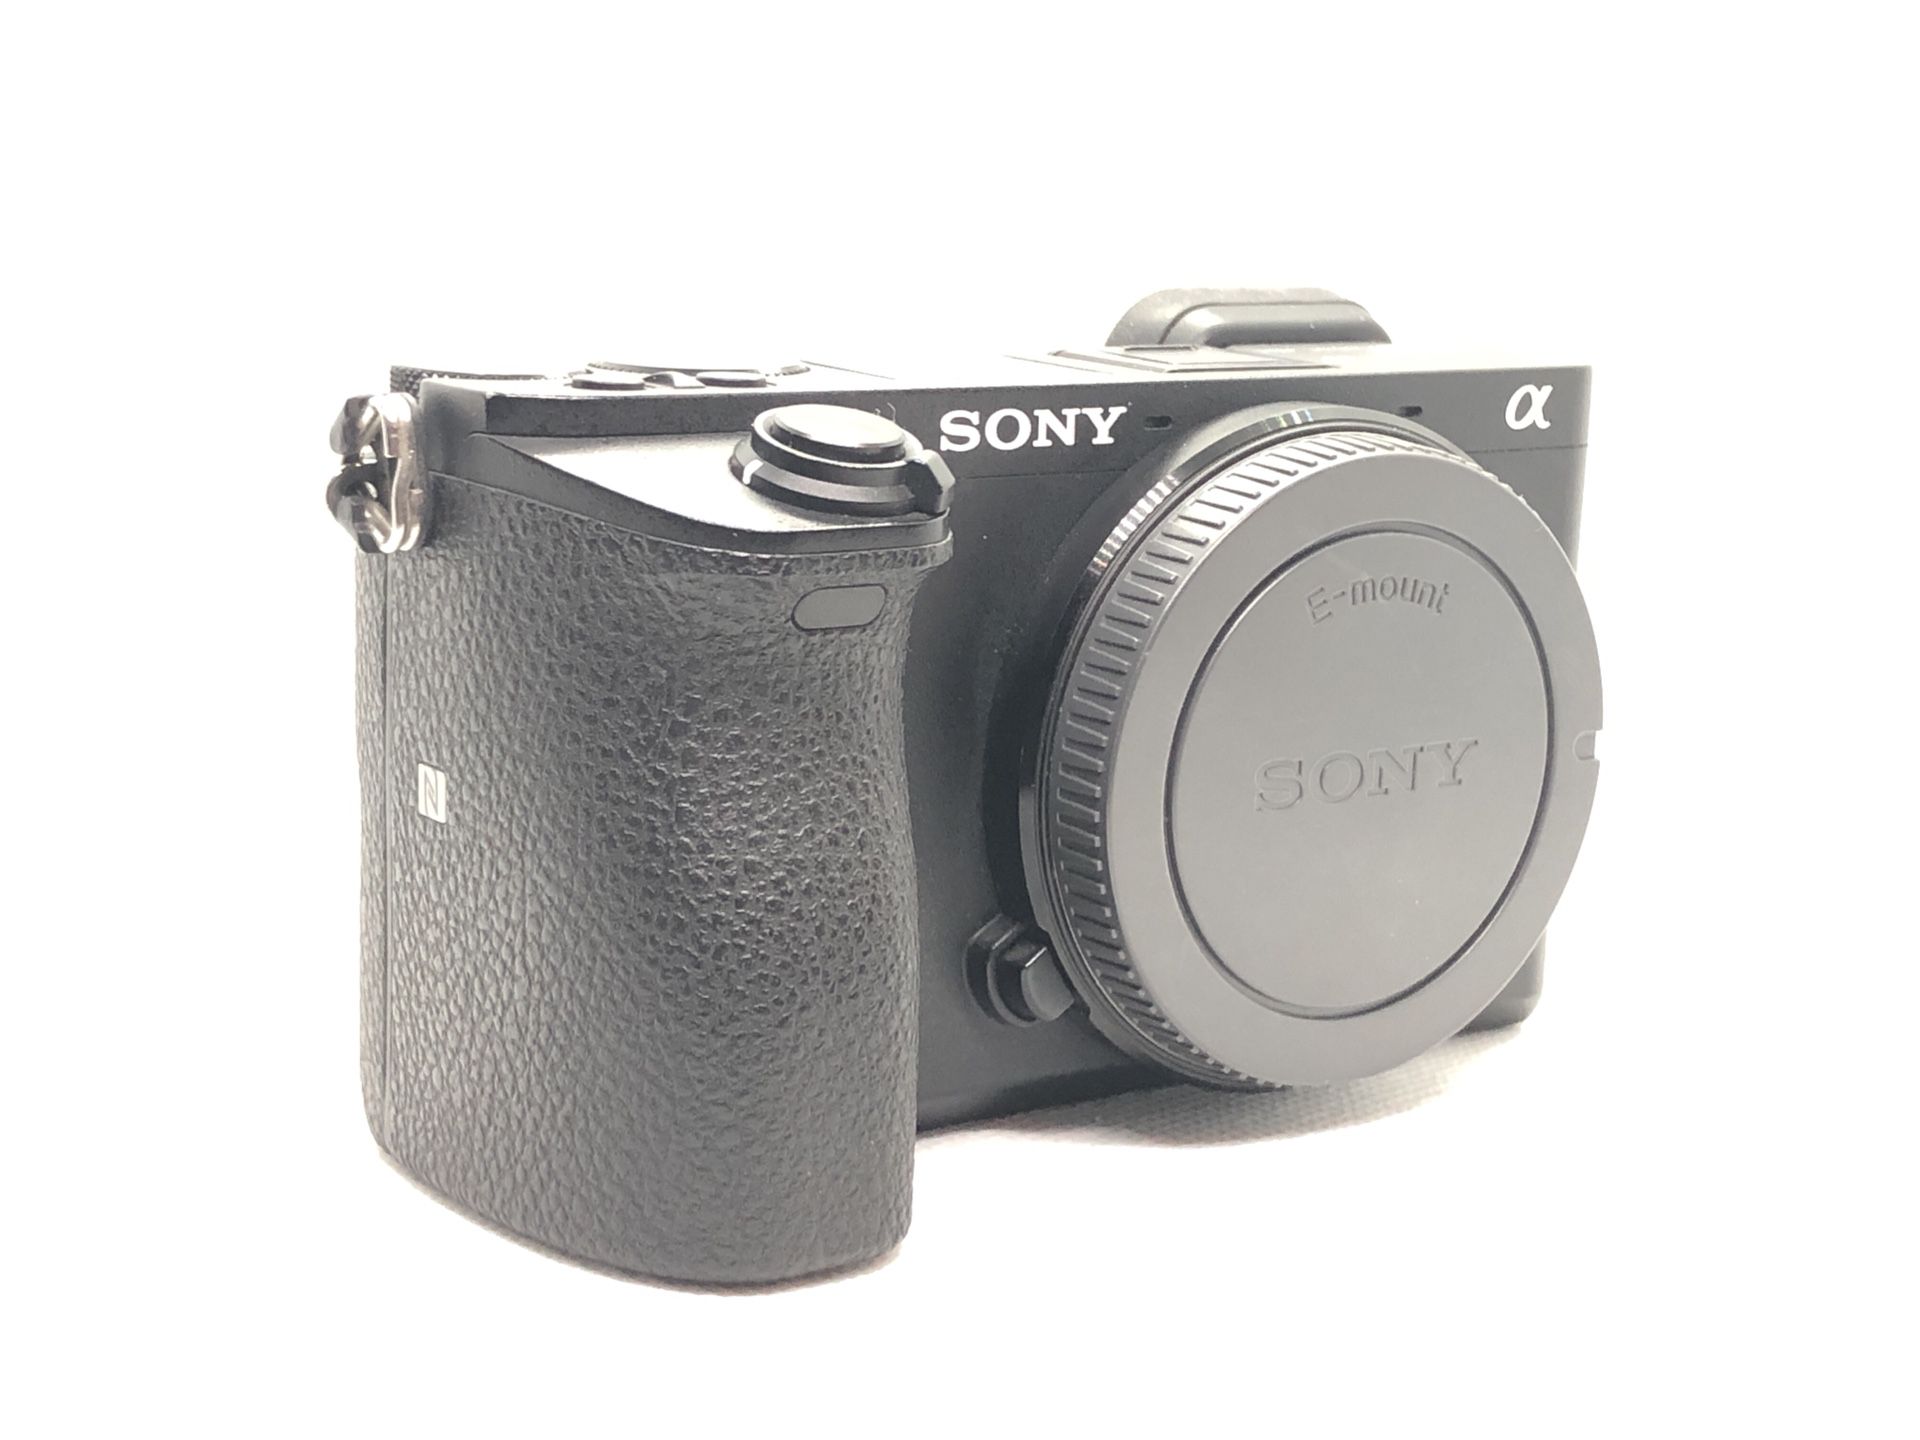 Sony Alpha a6500 Mirrorless Digital Camera 5k shutter count